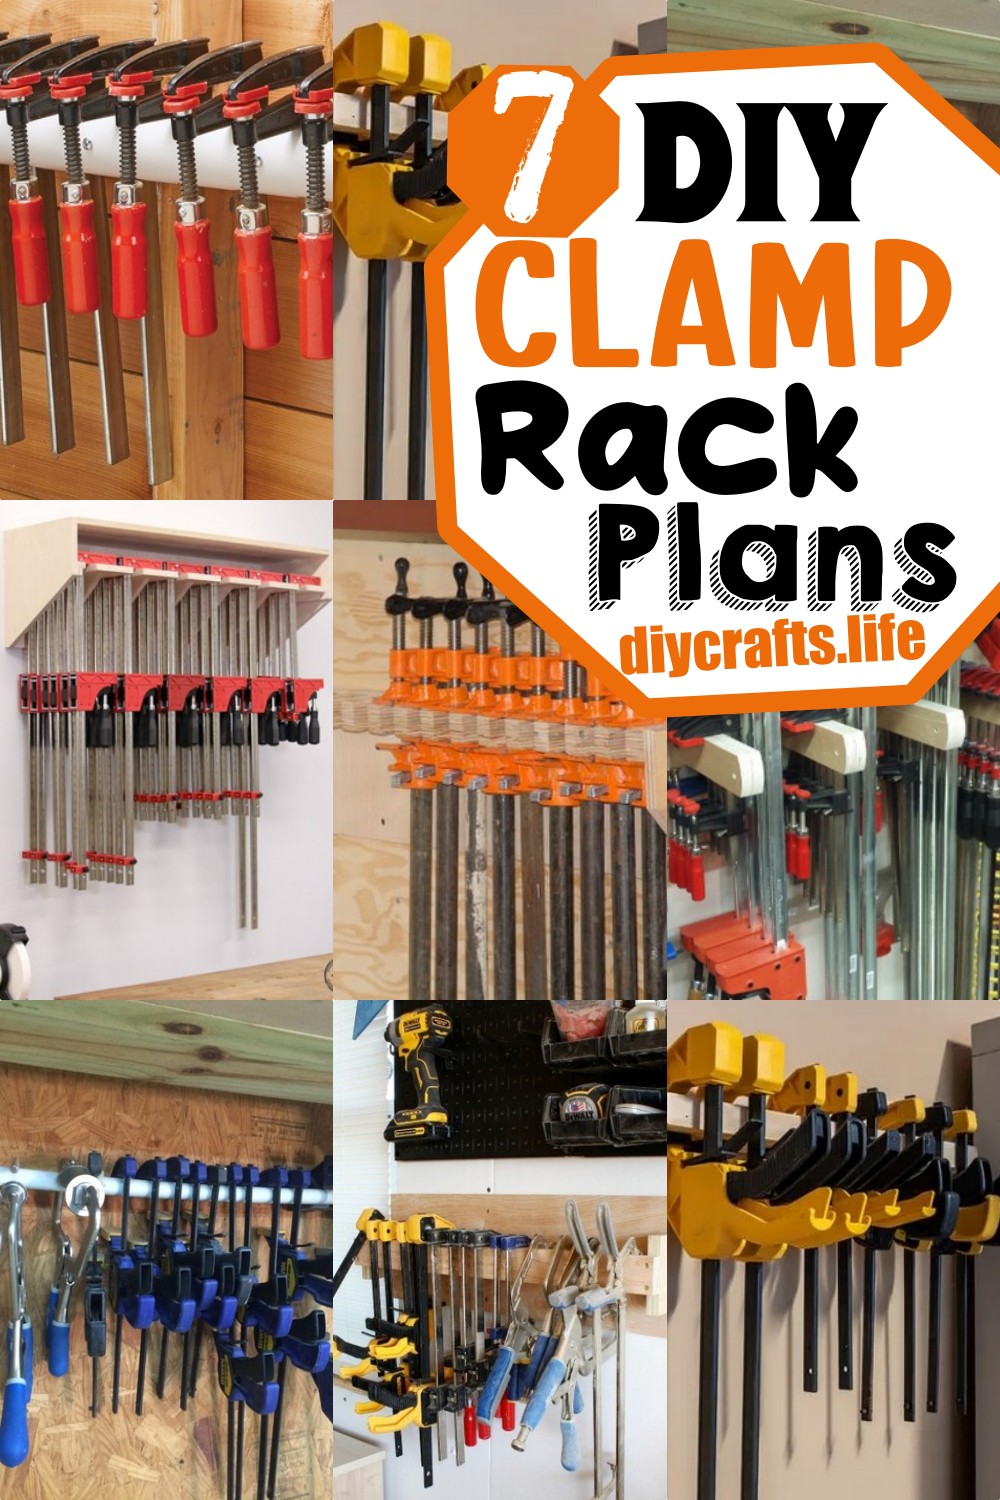 7 DIY Clamp Rack Plans